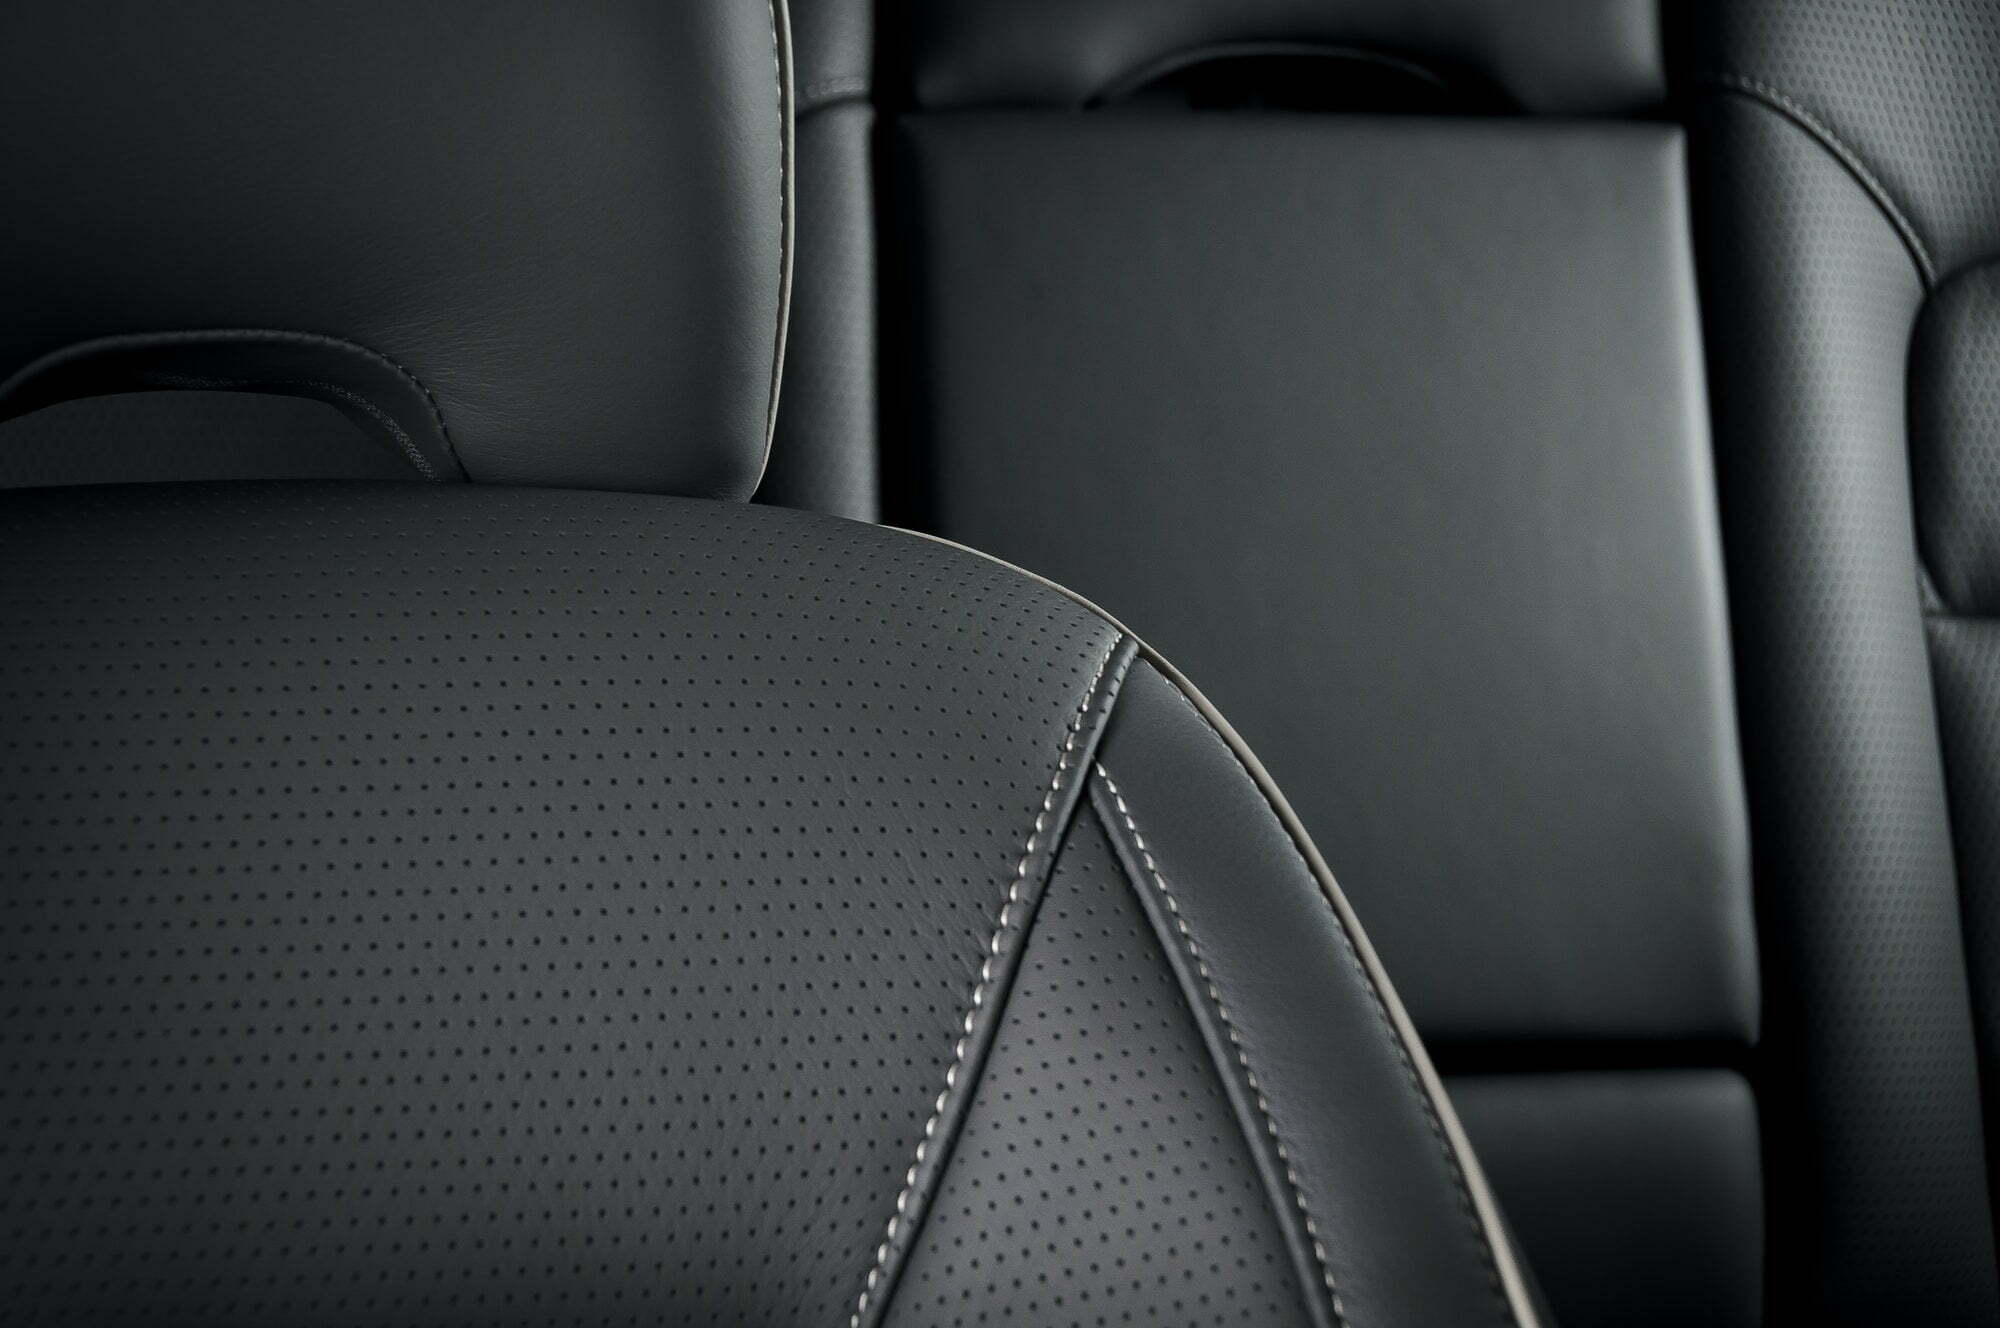 Modern sport car black leather interior. Part of leather car seat details.